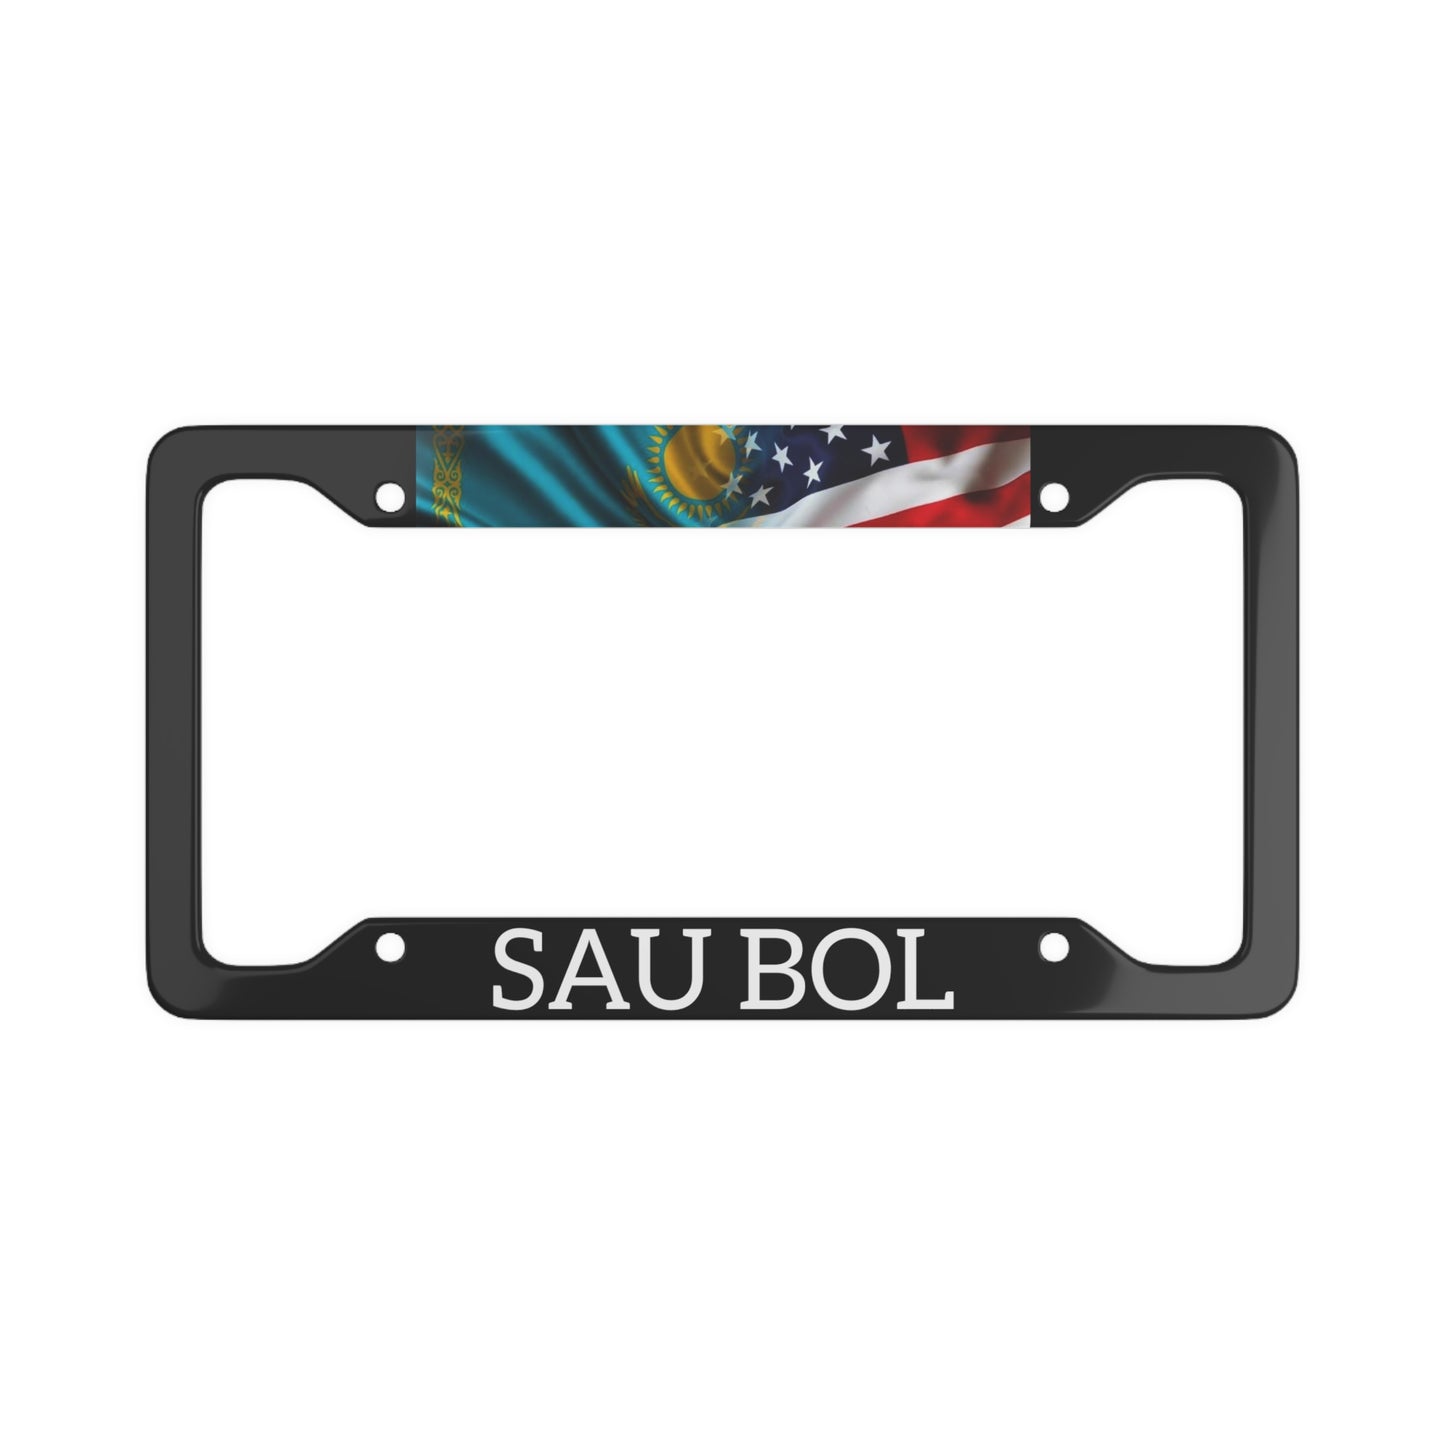 SAU BOL with flag License Plate Frame